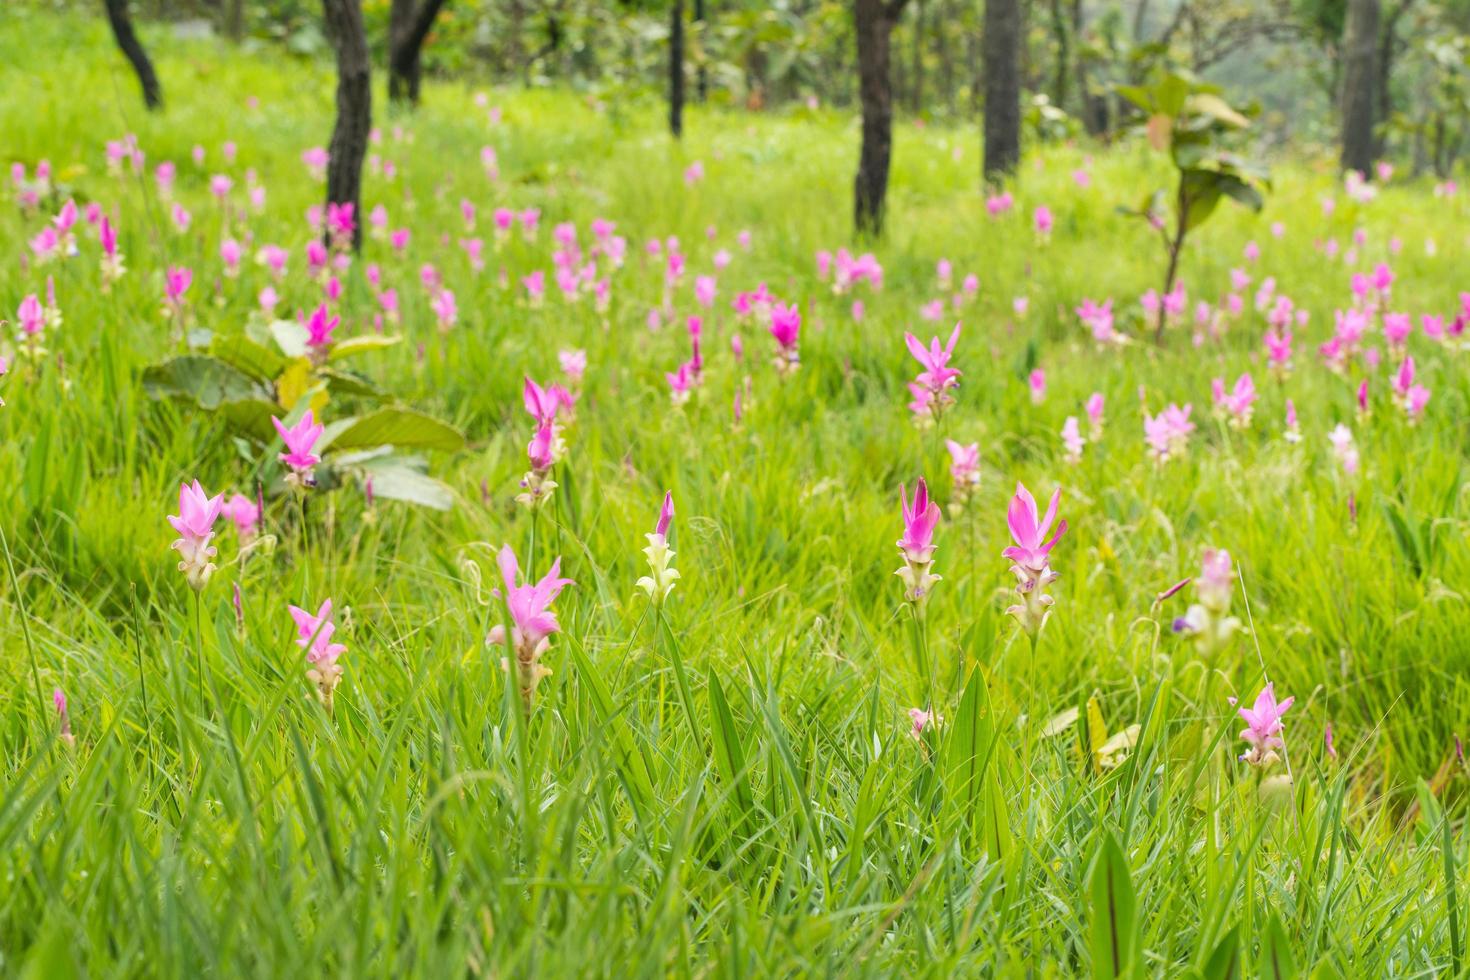 krachai bloem bloeit in het veld foto